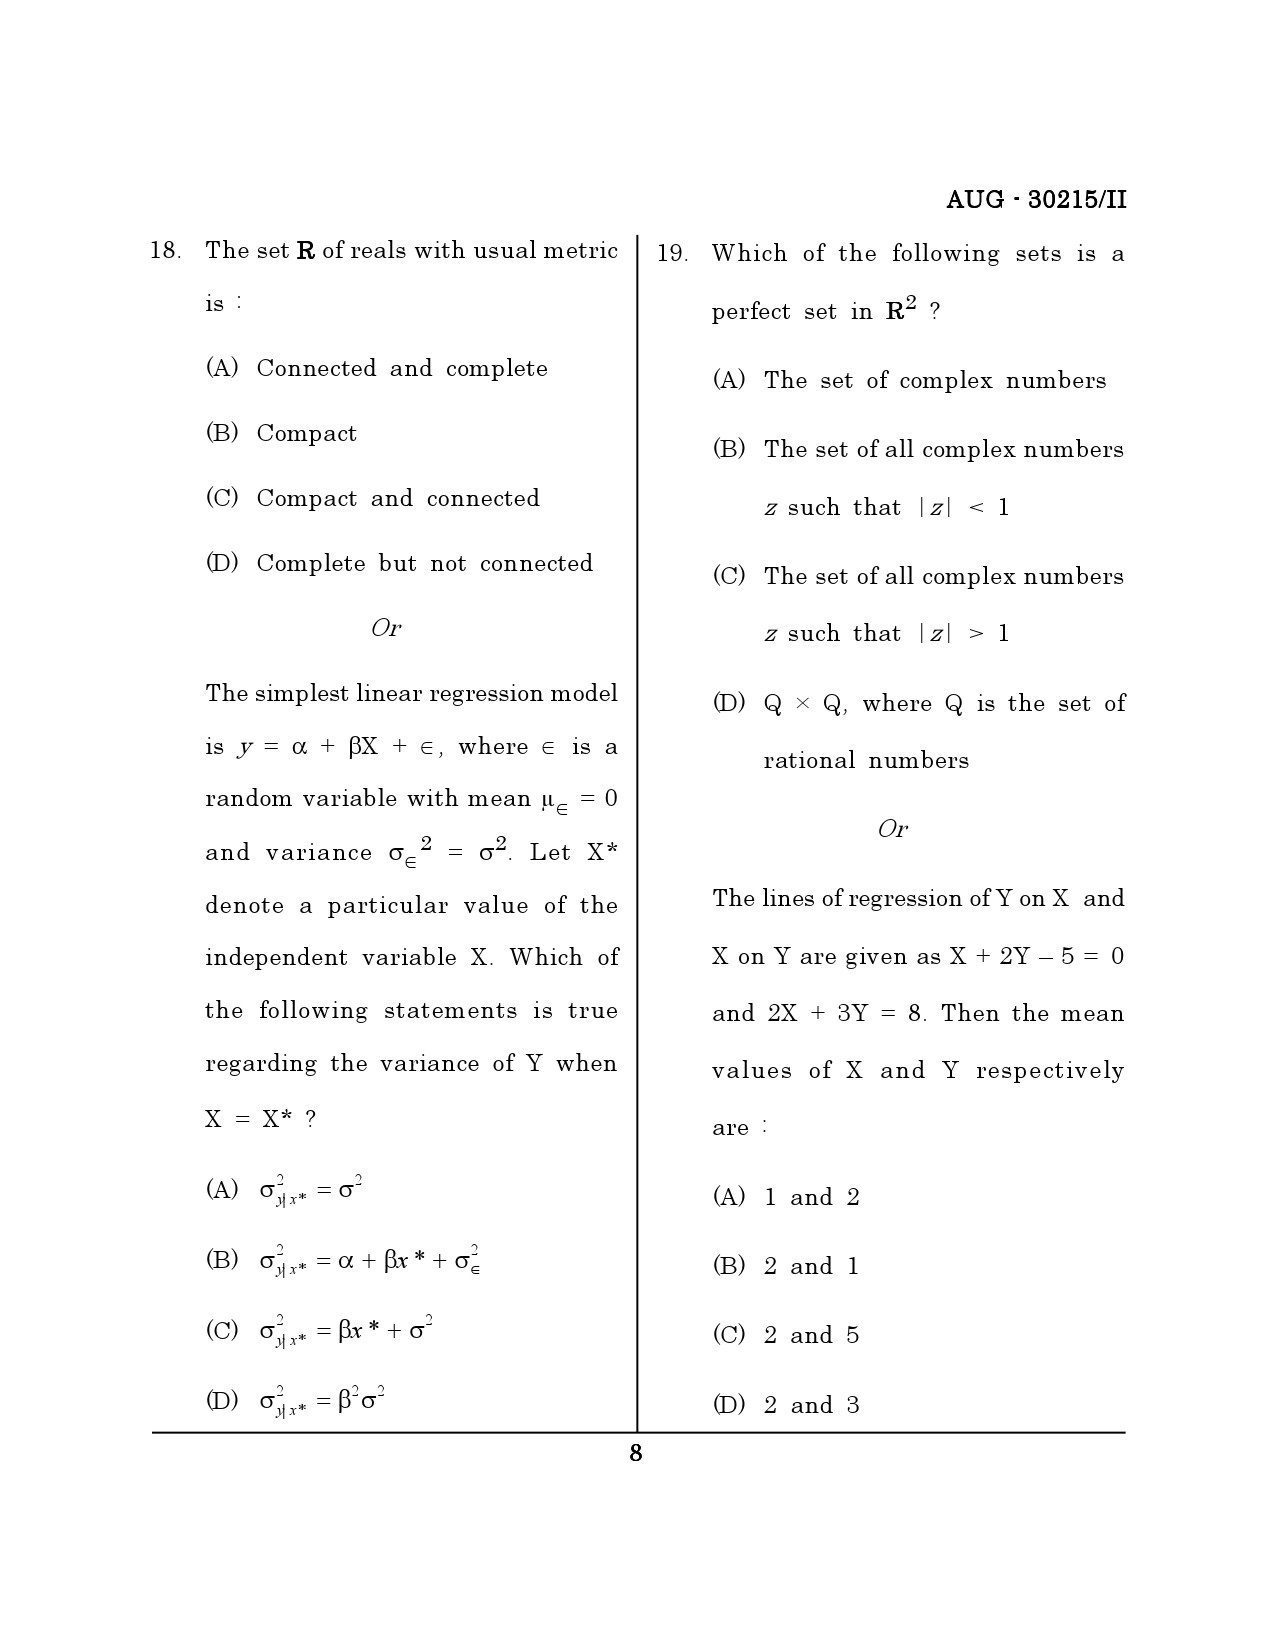 Maharashtra SET Mathematical Sciences Question Paper II August 2015 7